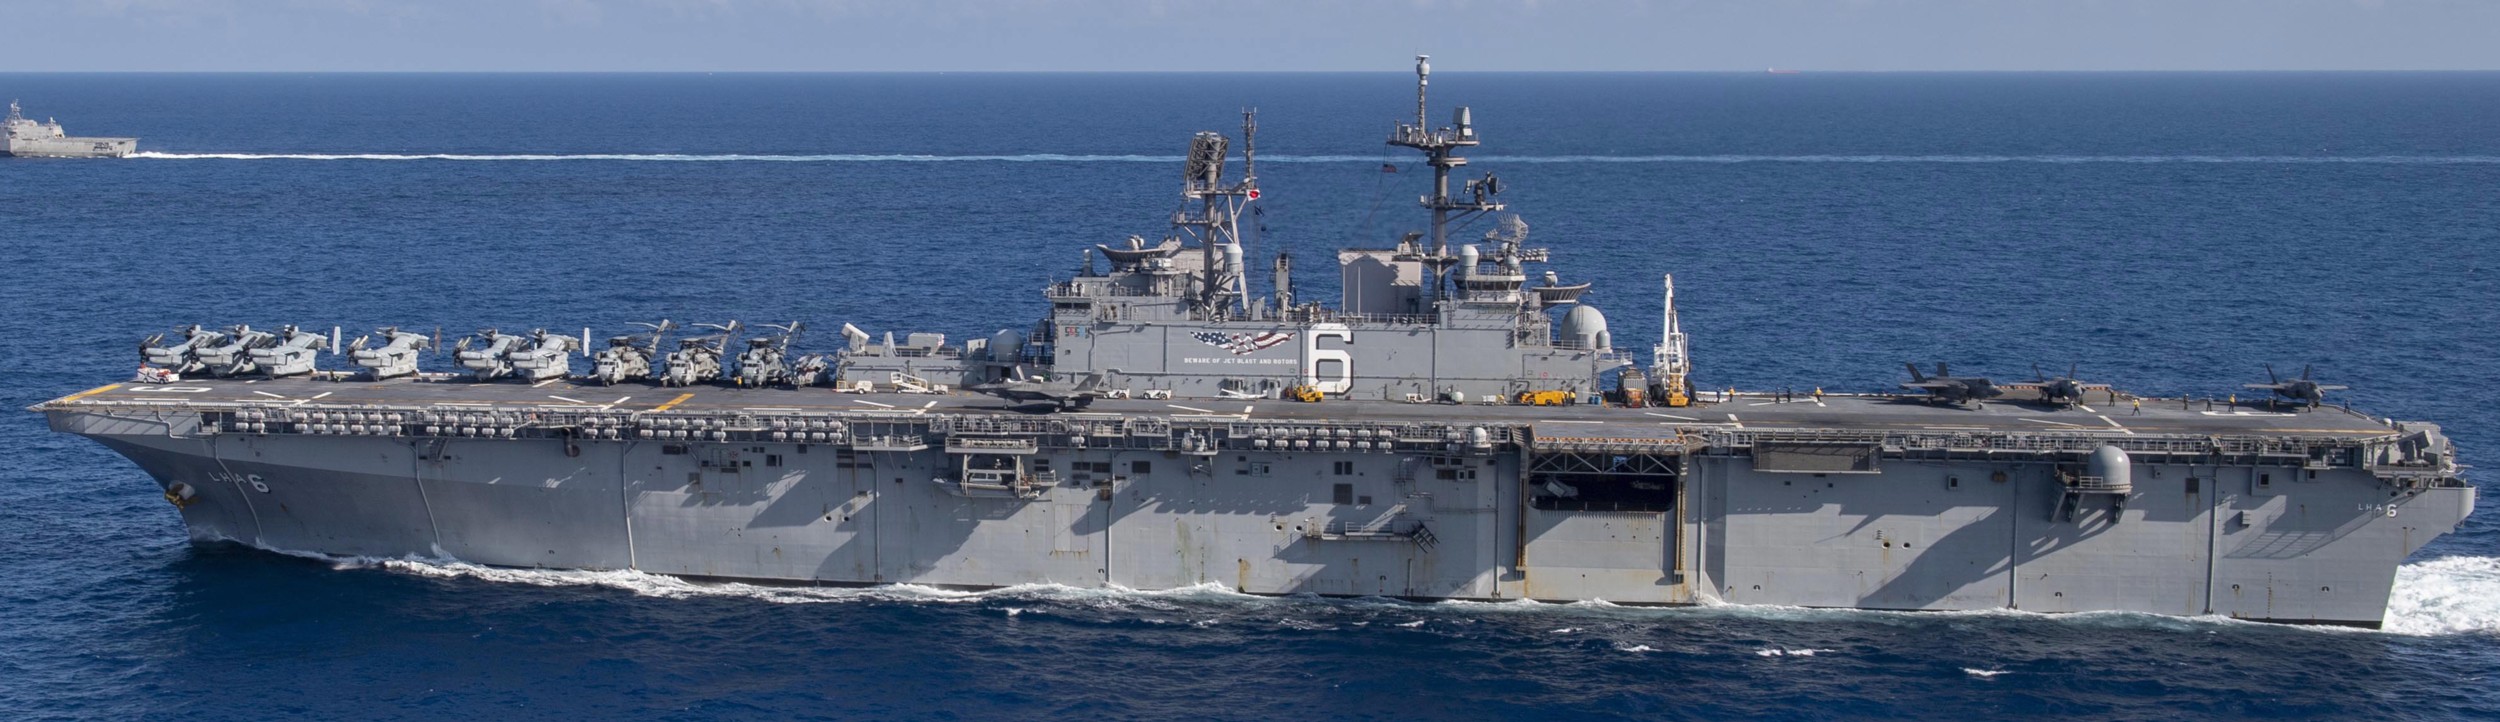 lha-6 uss america amphibious assault ship landing us navy marines vmm-265 165